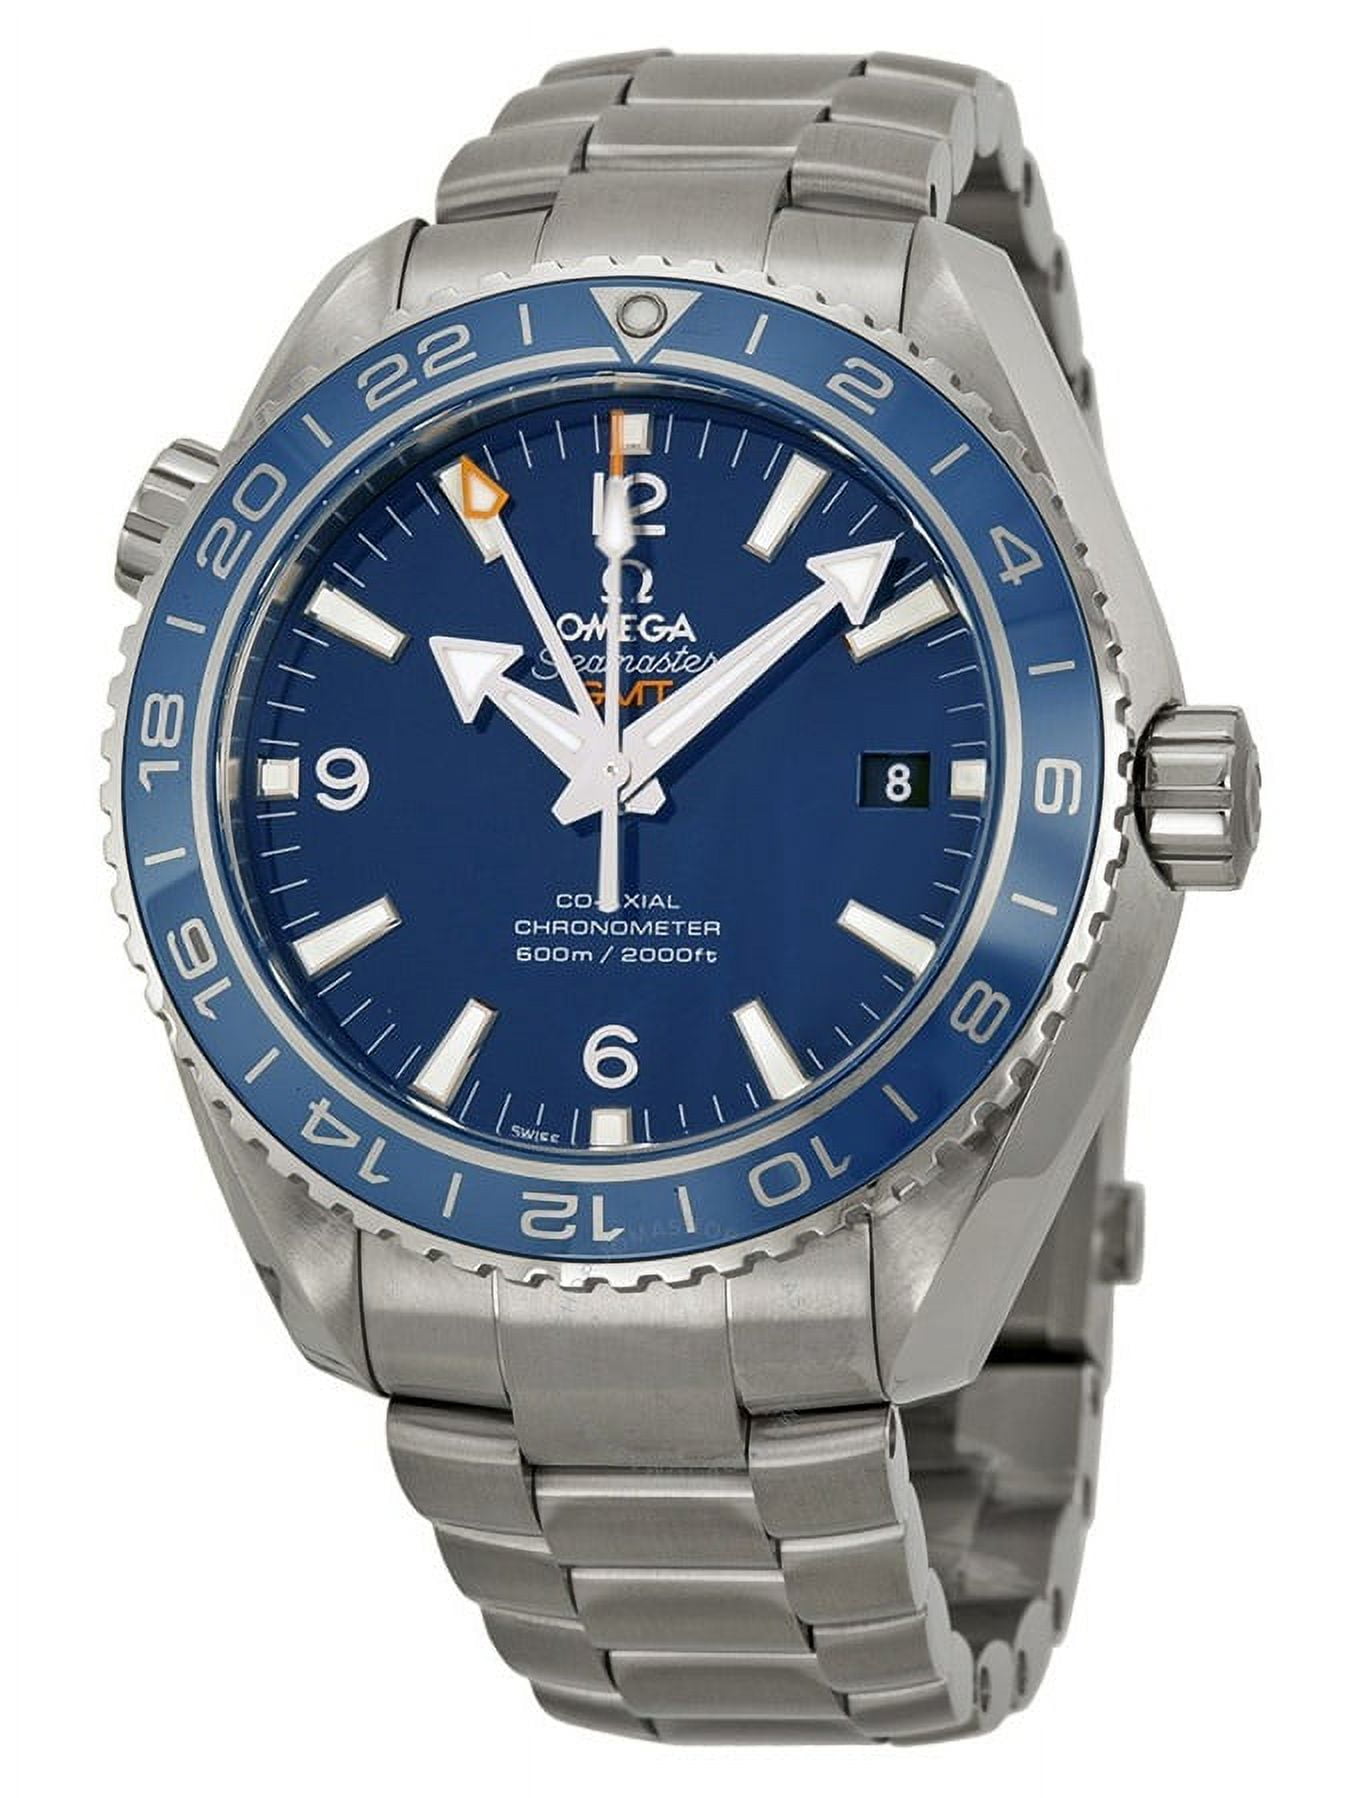 GENUINE OMEGA SEAMASTER Planet Ocean Watch Bracelet Strap 22mm Ref. 1590  867 £599.00 - PicClick UK